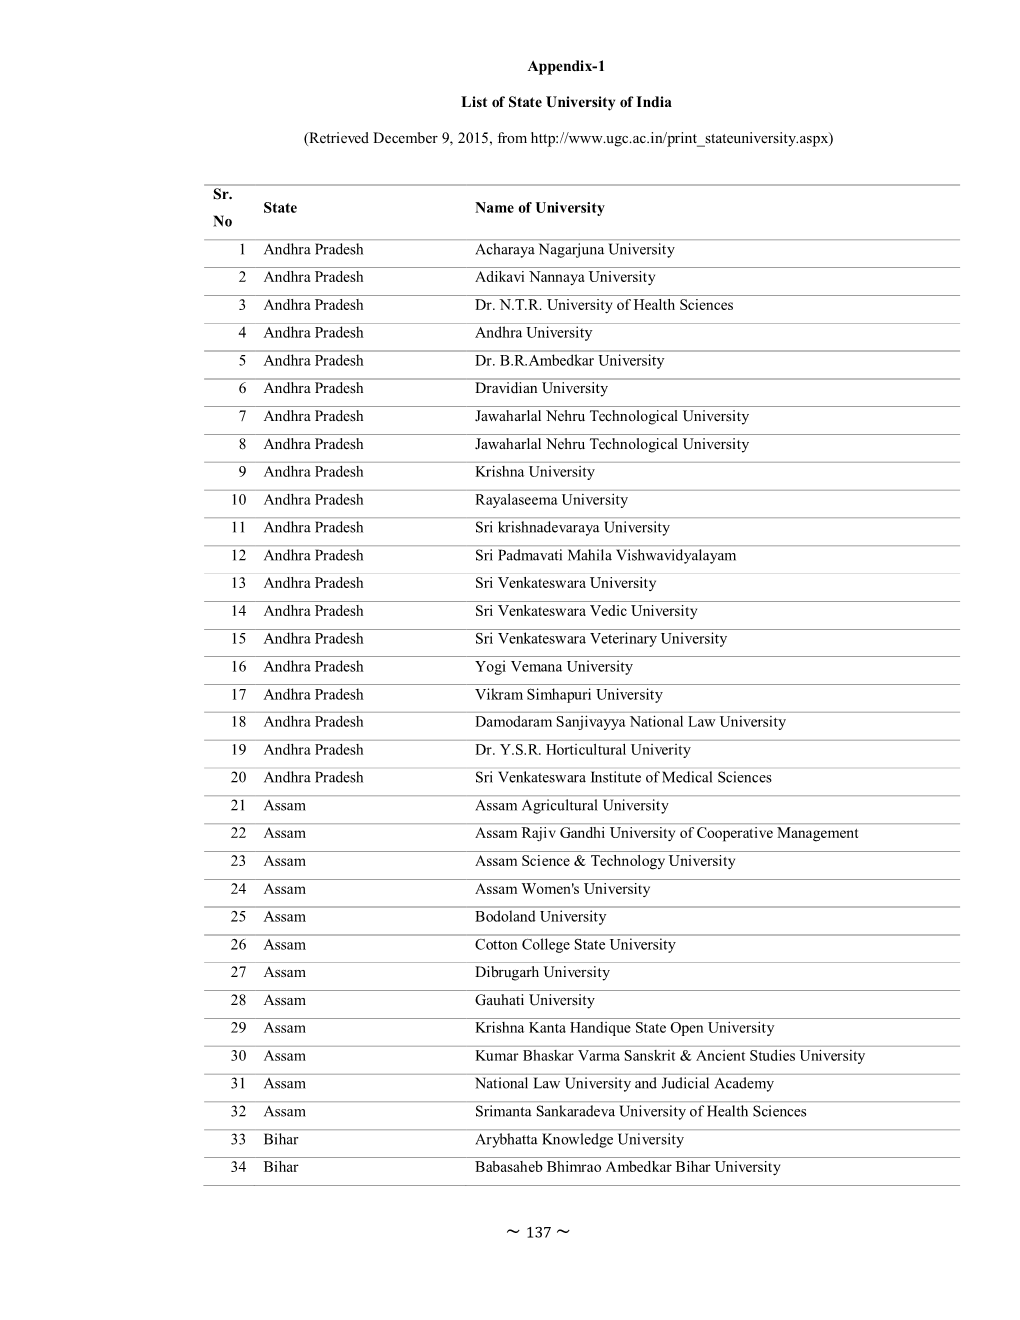 Appendix-1 List of State University of India (Retrieved December 9, 2015